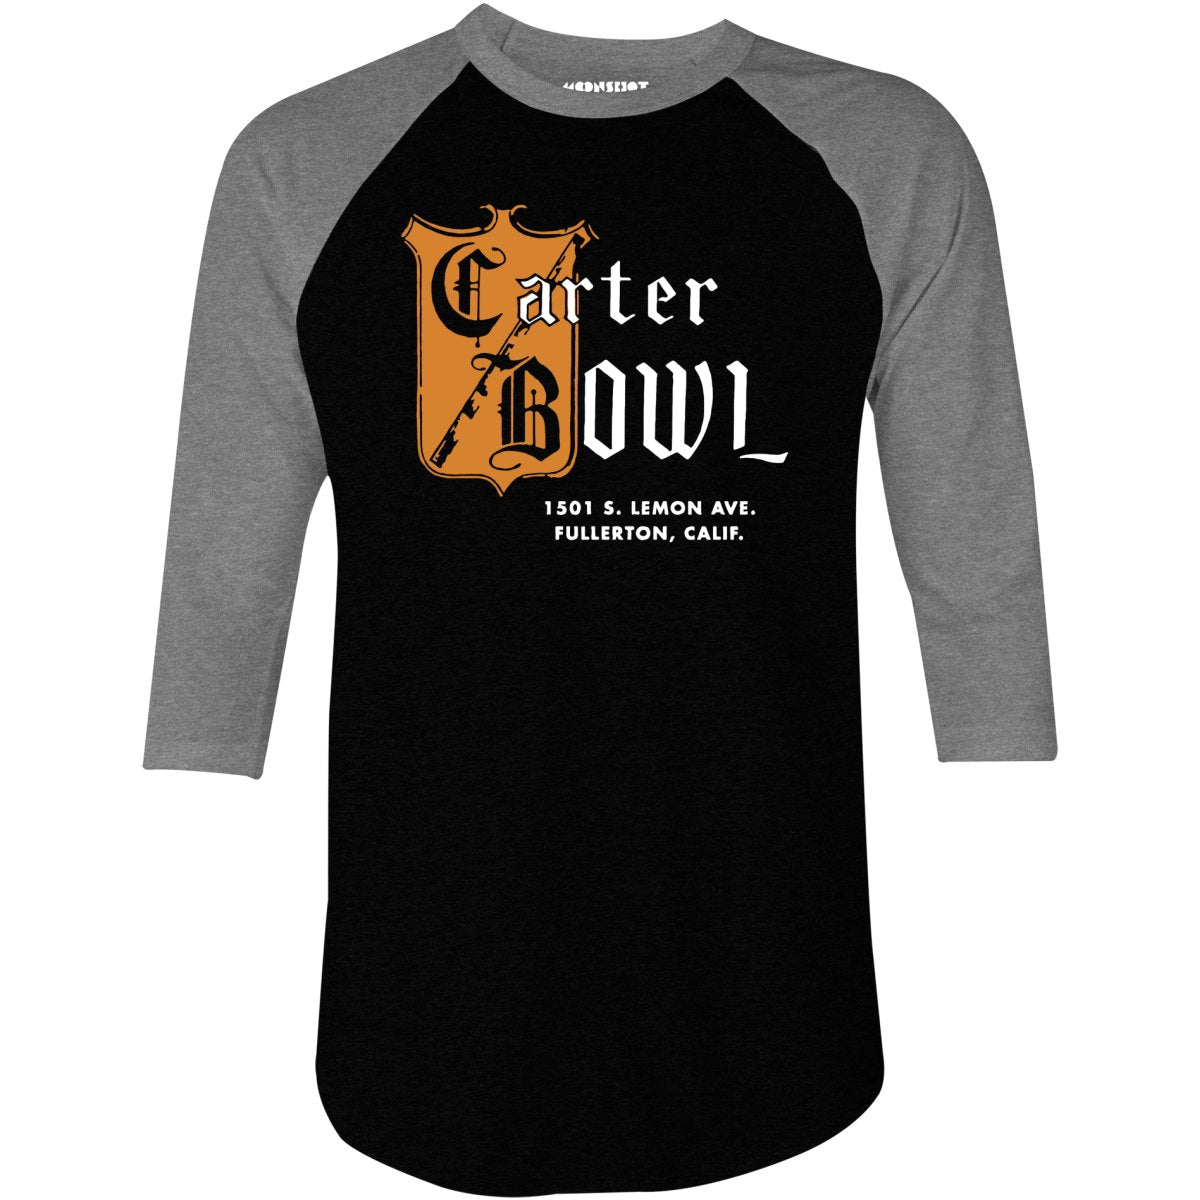 Carter Bowl - Fullerton, CA - Vintage Bowling Alley - 3/4 Sleeve Raglan T-Shirt